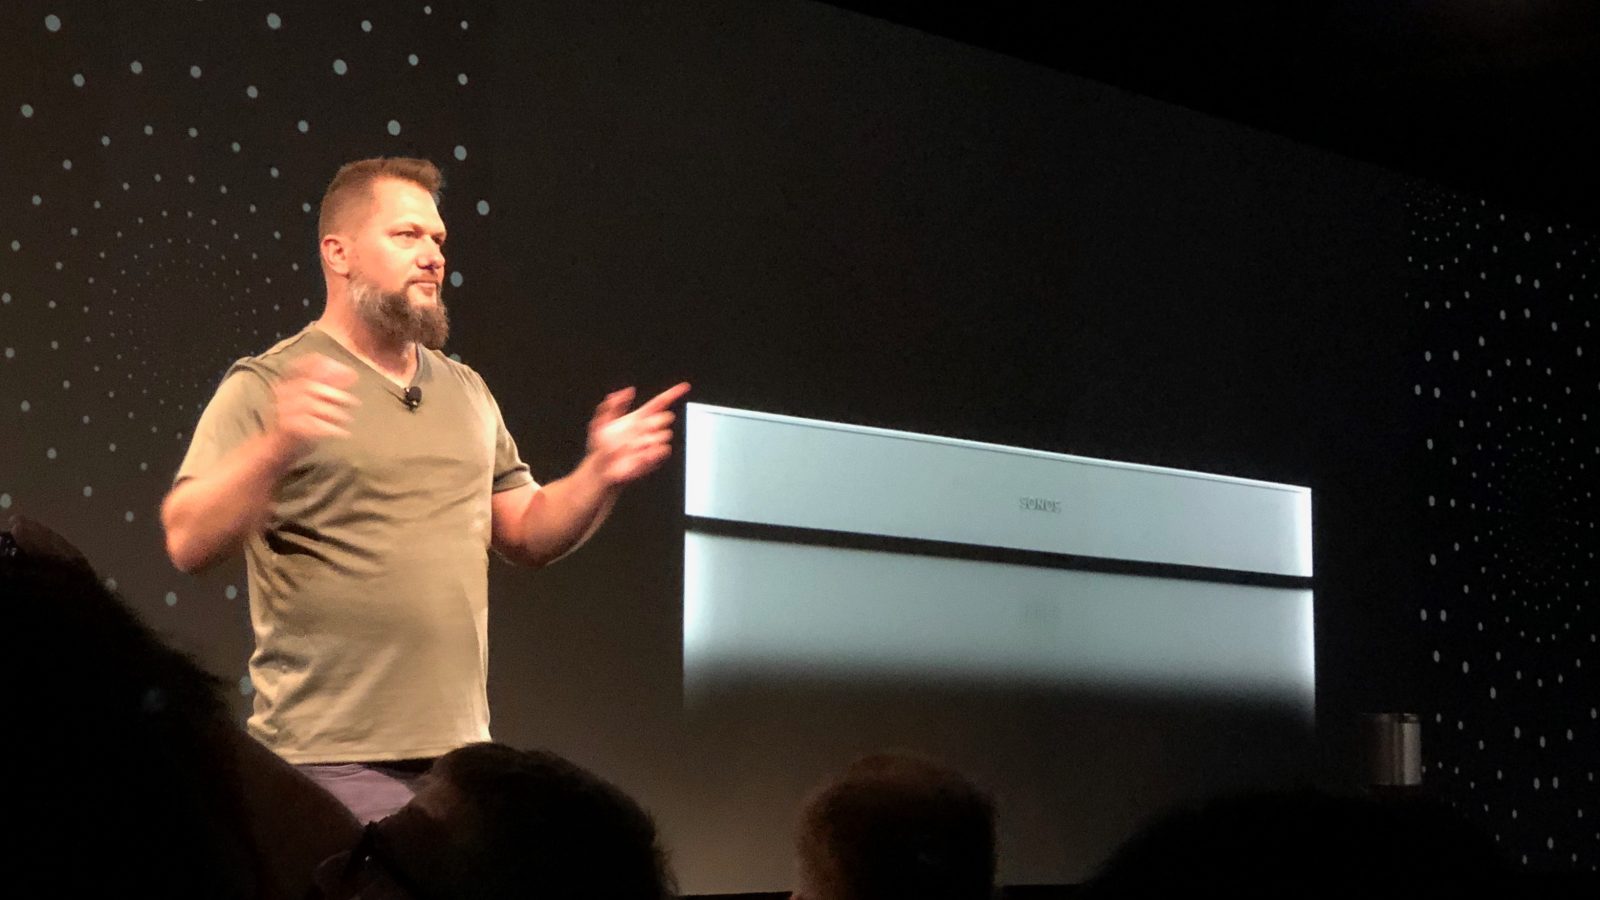 Sonos introduces 'Beam' sound bar with AirPlay 2, Alexa control - 9to5Mac